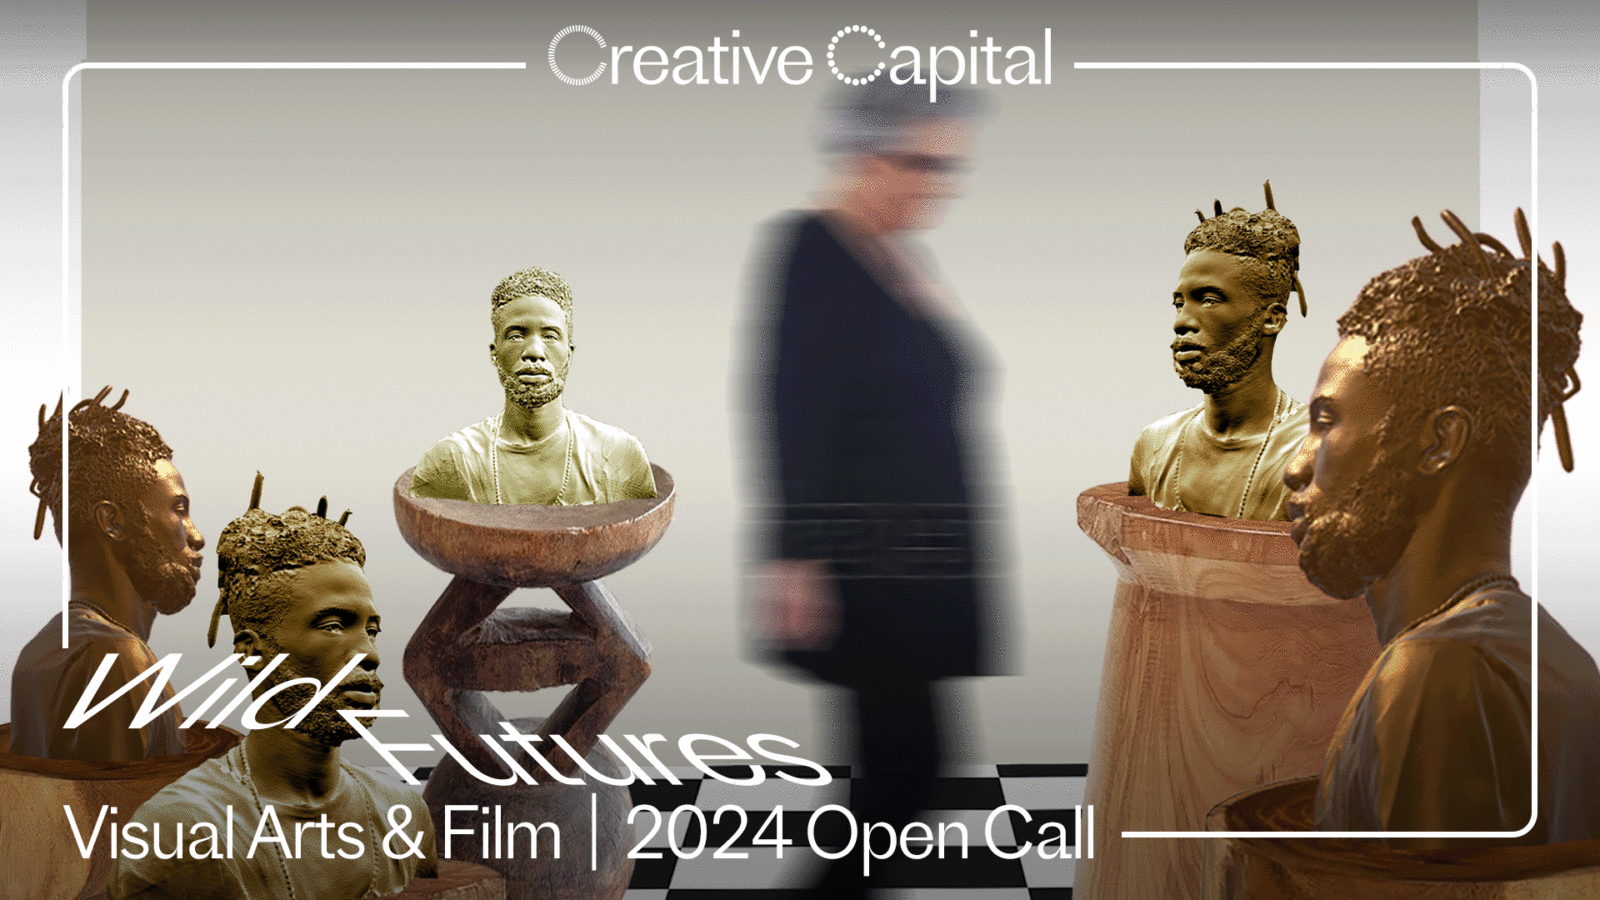 Creative Capital Wild Futures 2024 Open Call.